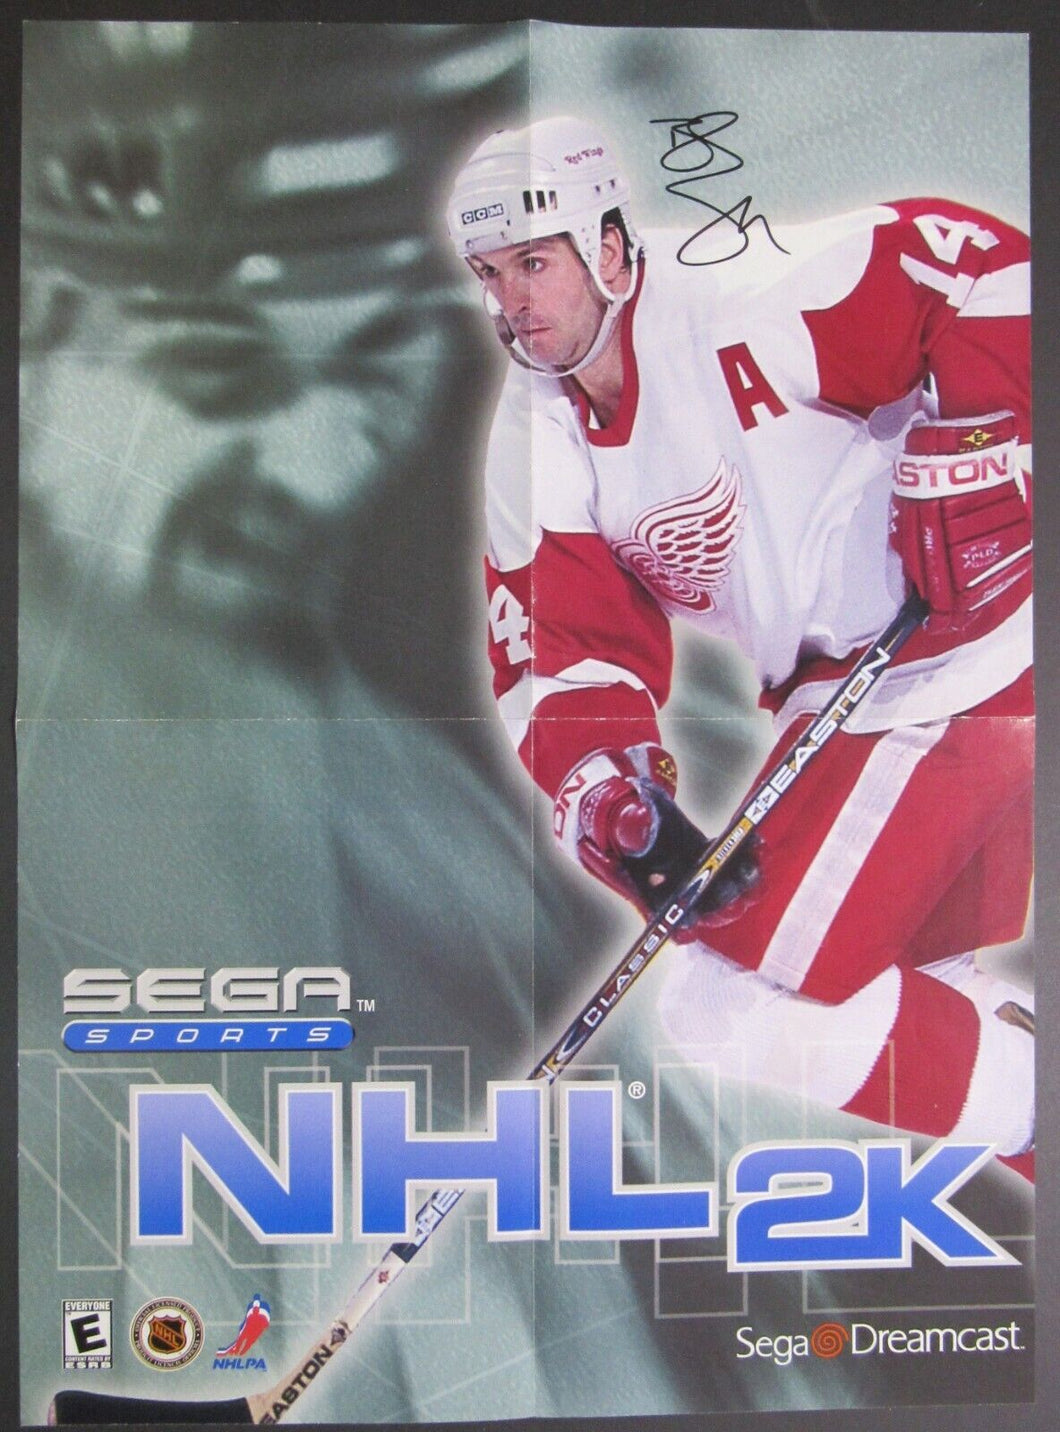 Brendan Shanahan Autographed NHL 2K Sega Foldout Poster Detroit Red Wings Hockey